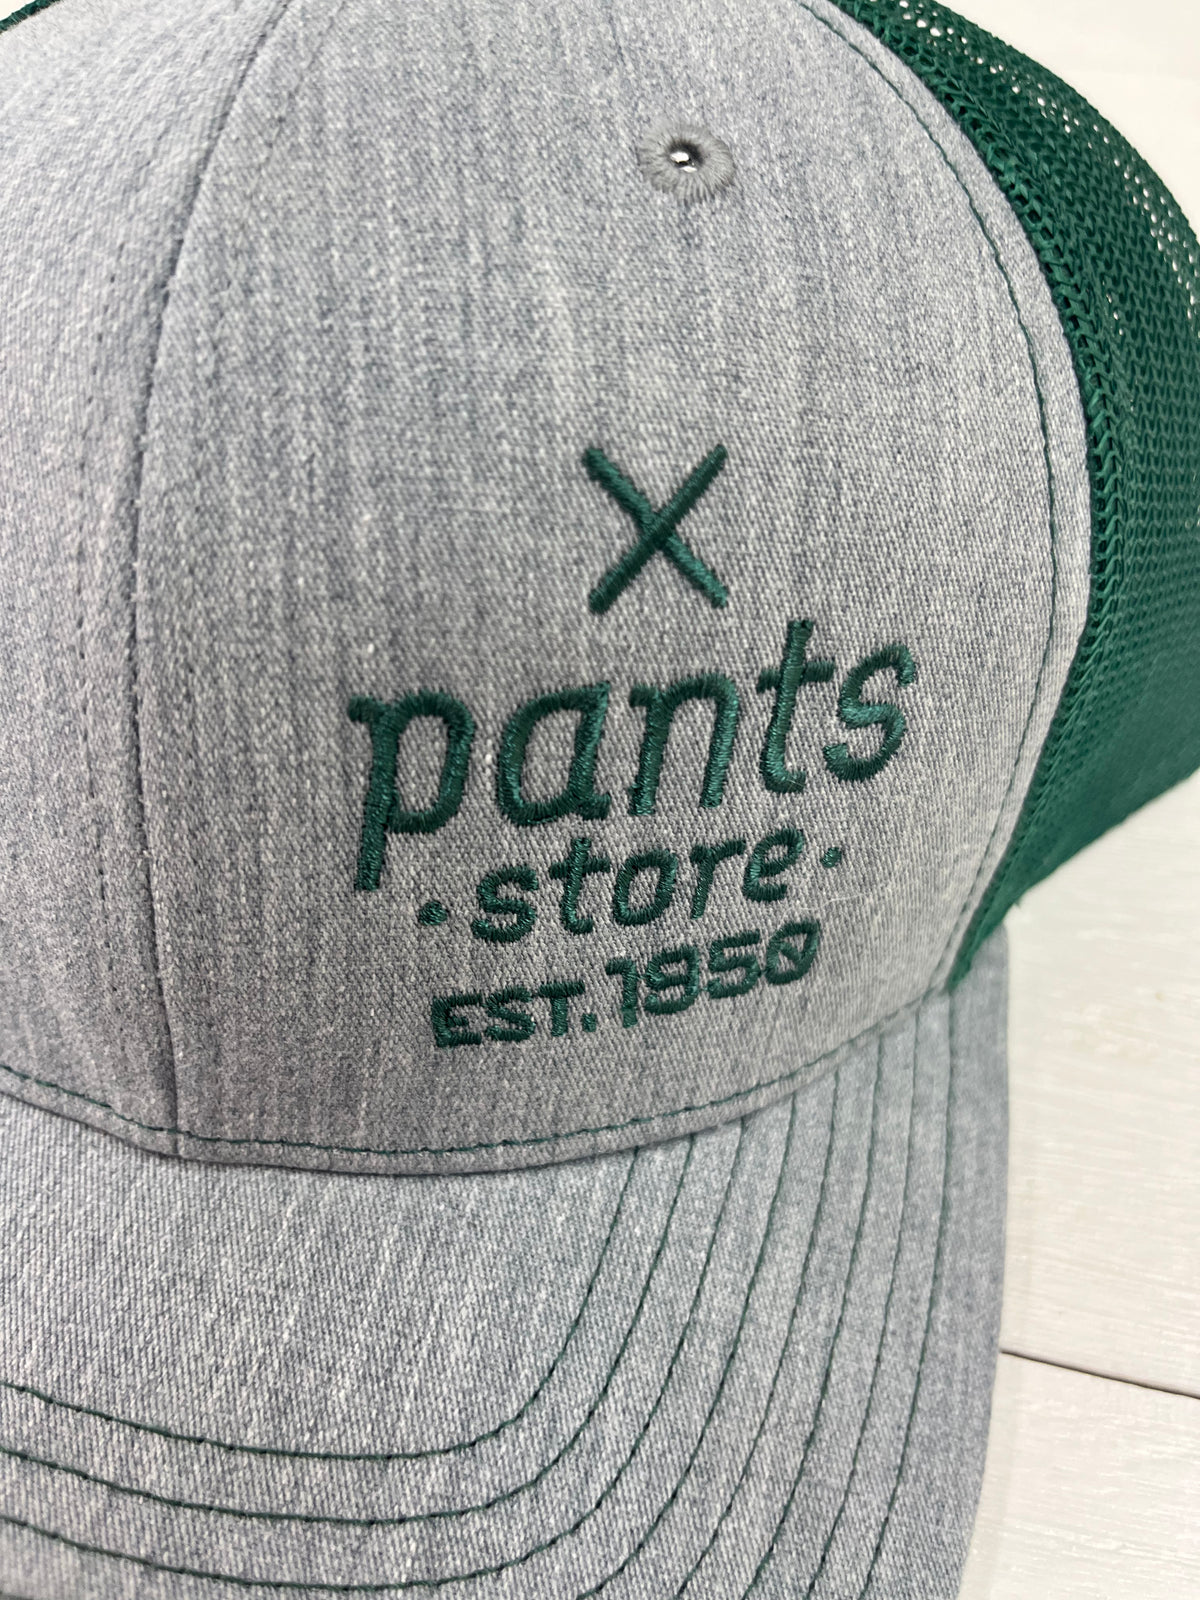 Pants Store Trucker Hat